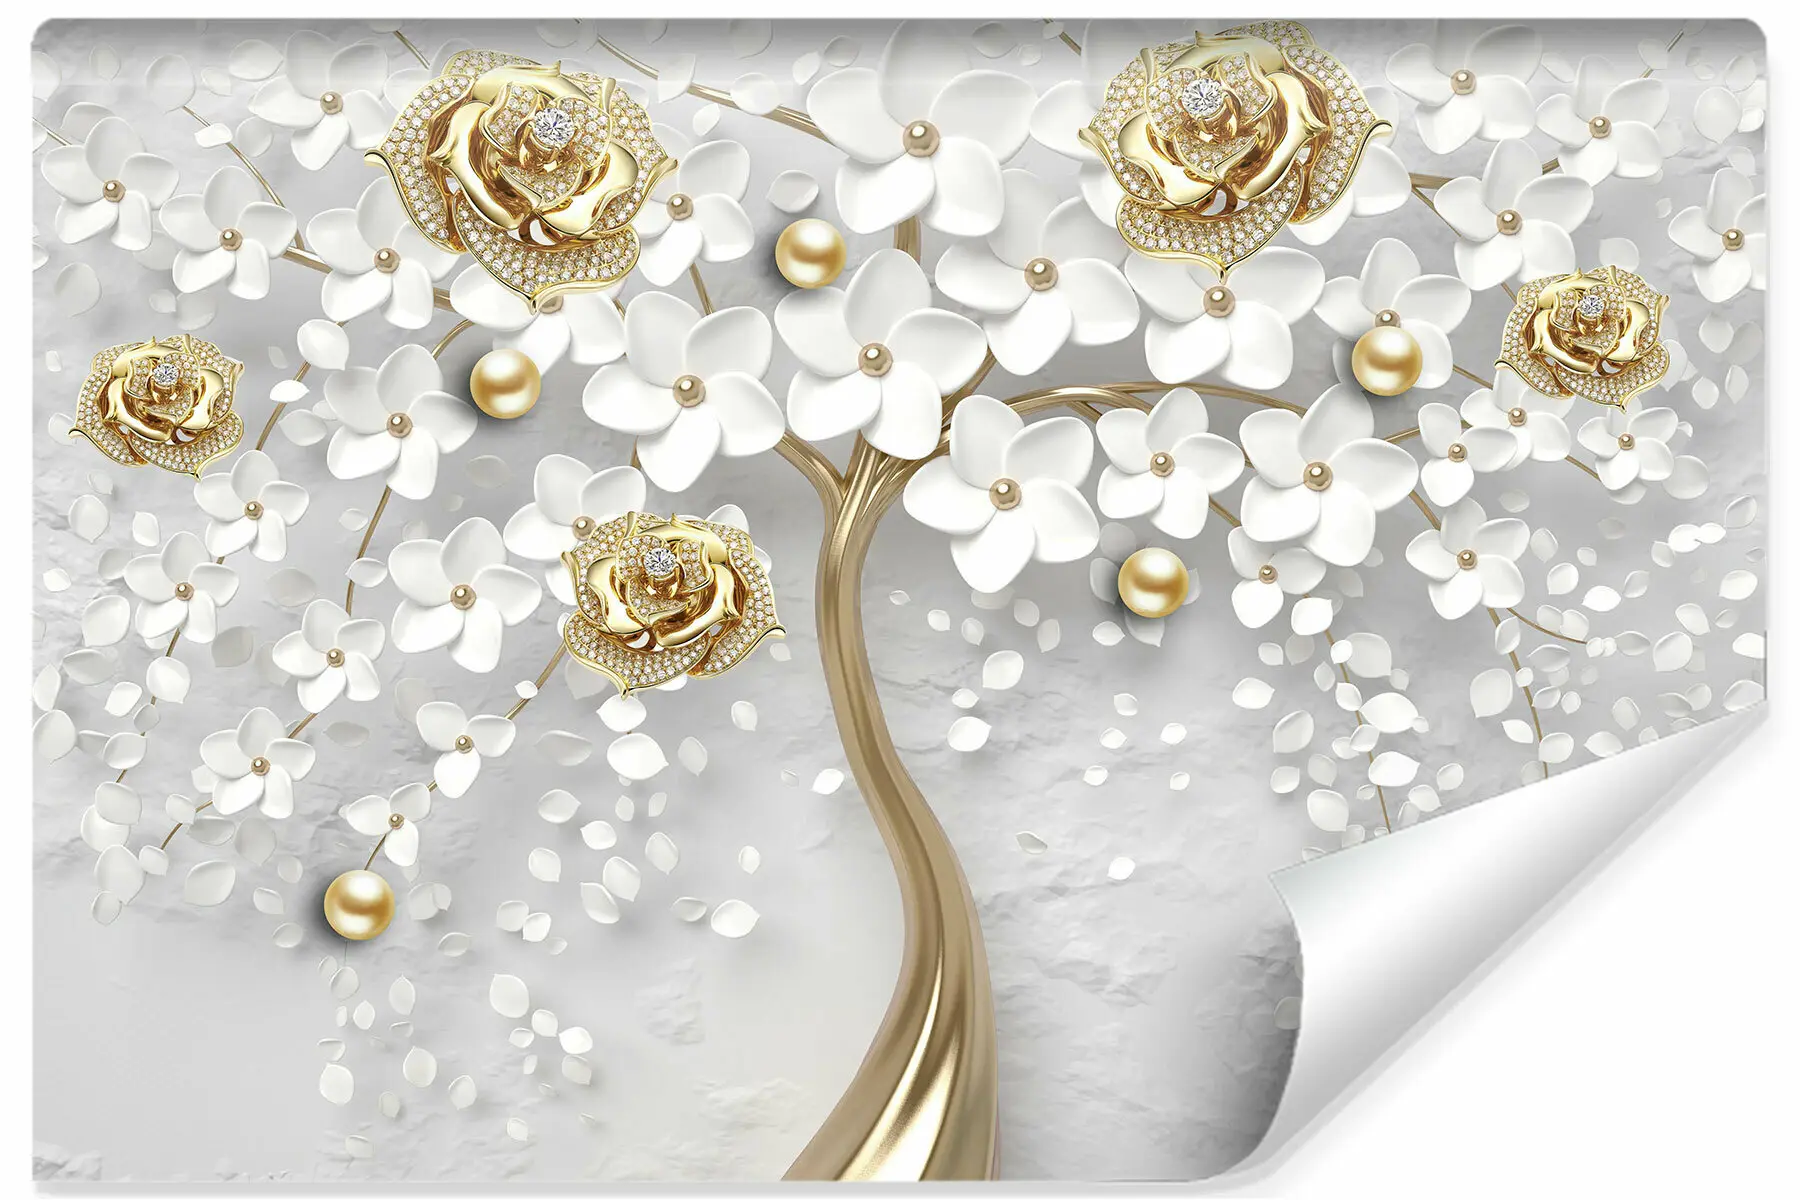 Fototapet abstrakt Baum Blumen Diamanten | Tapeten